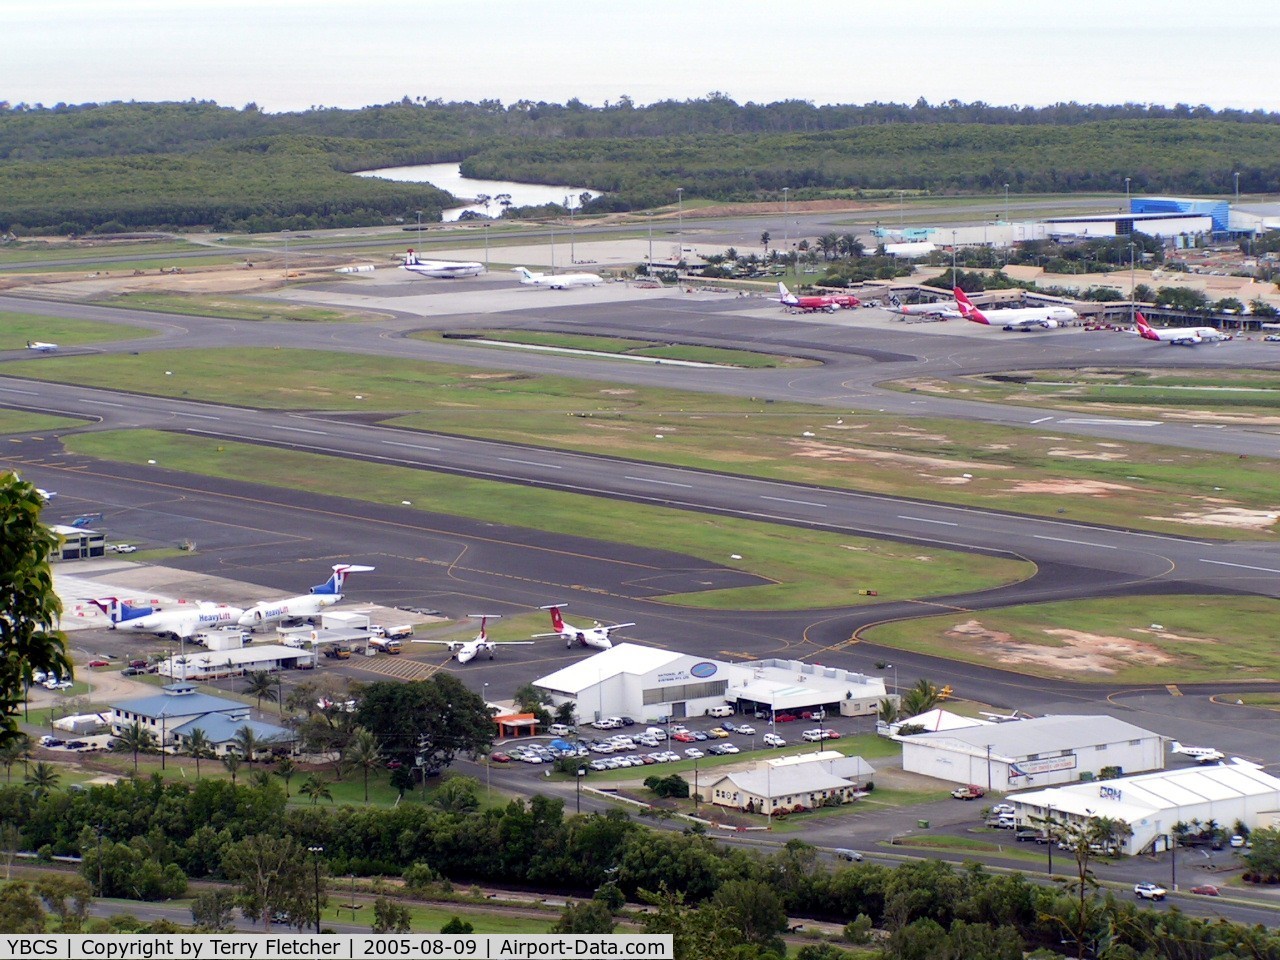 Cairns International Airport, Cairns, Queensland Australia (YBCS) - View from the adjacent Mountain park